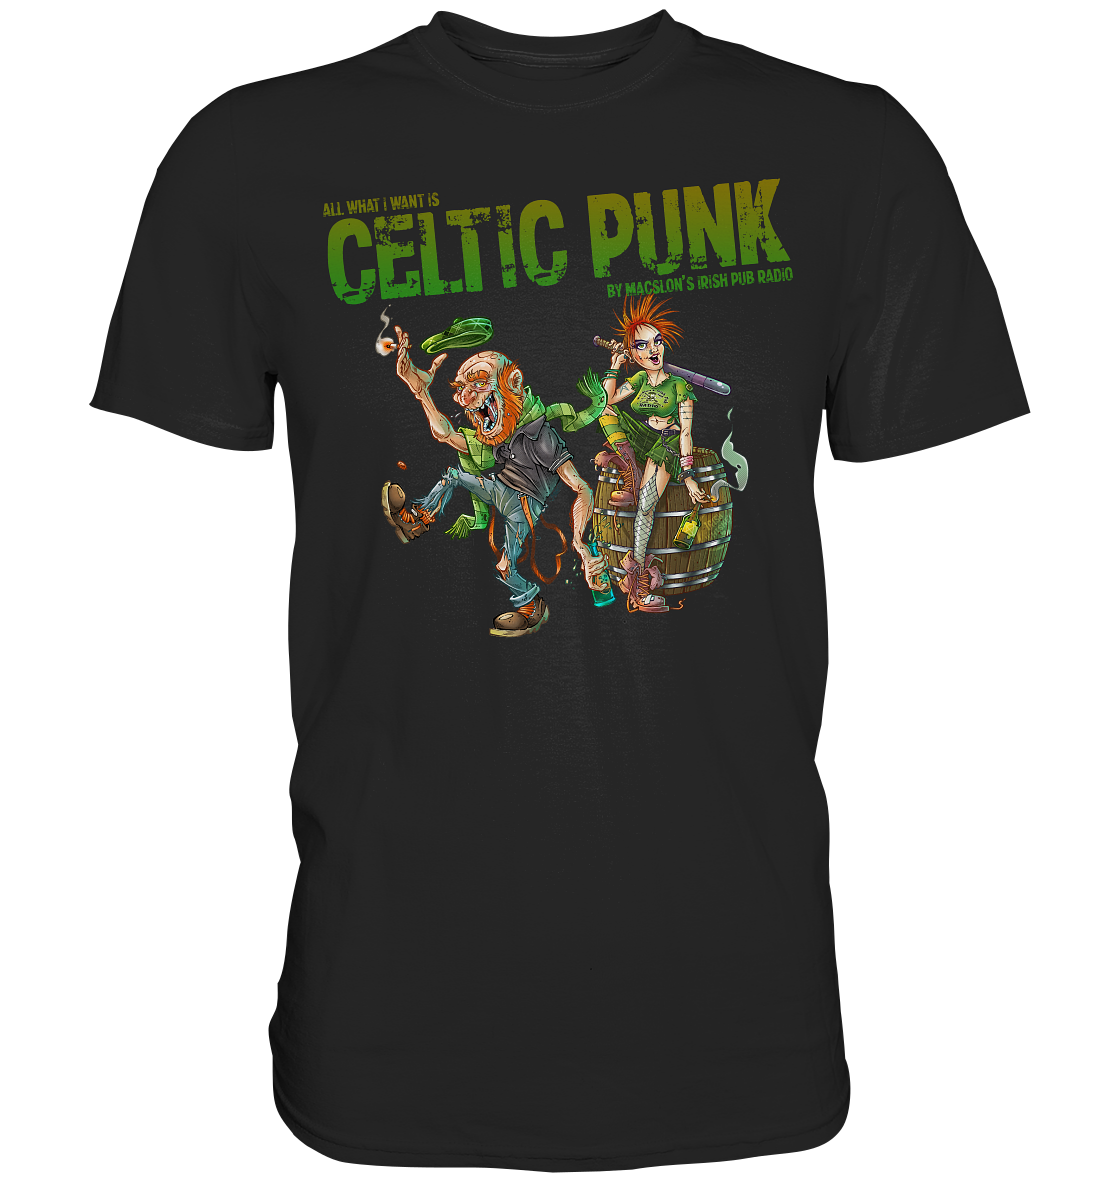 All What I Want Is "Celtic Punk" - Premium Shirt